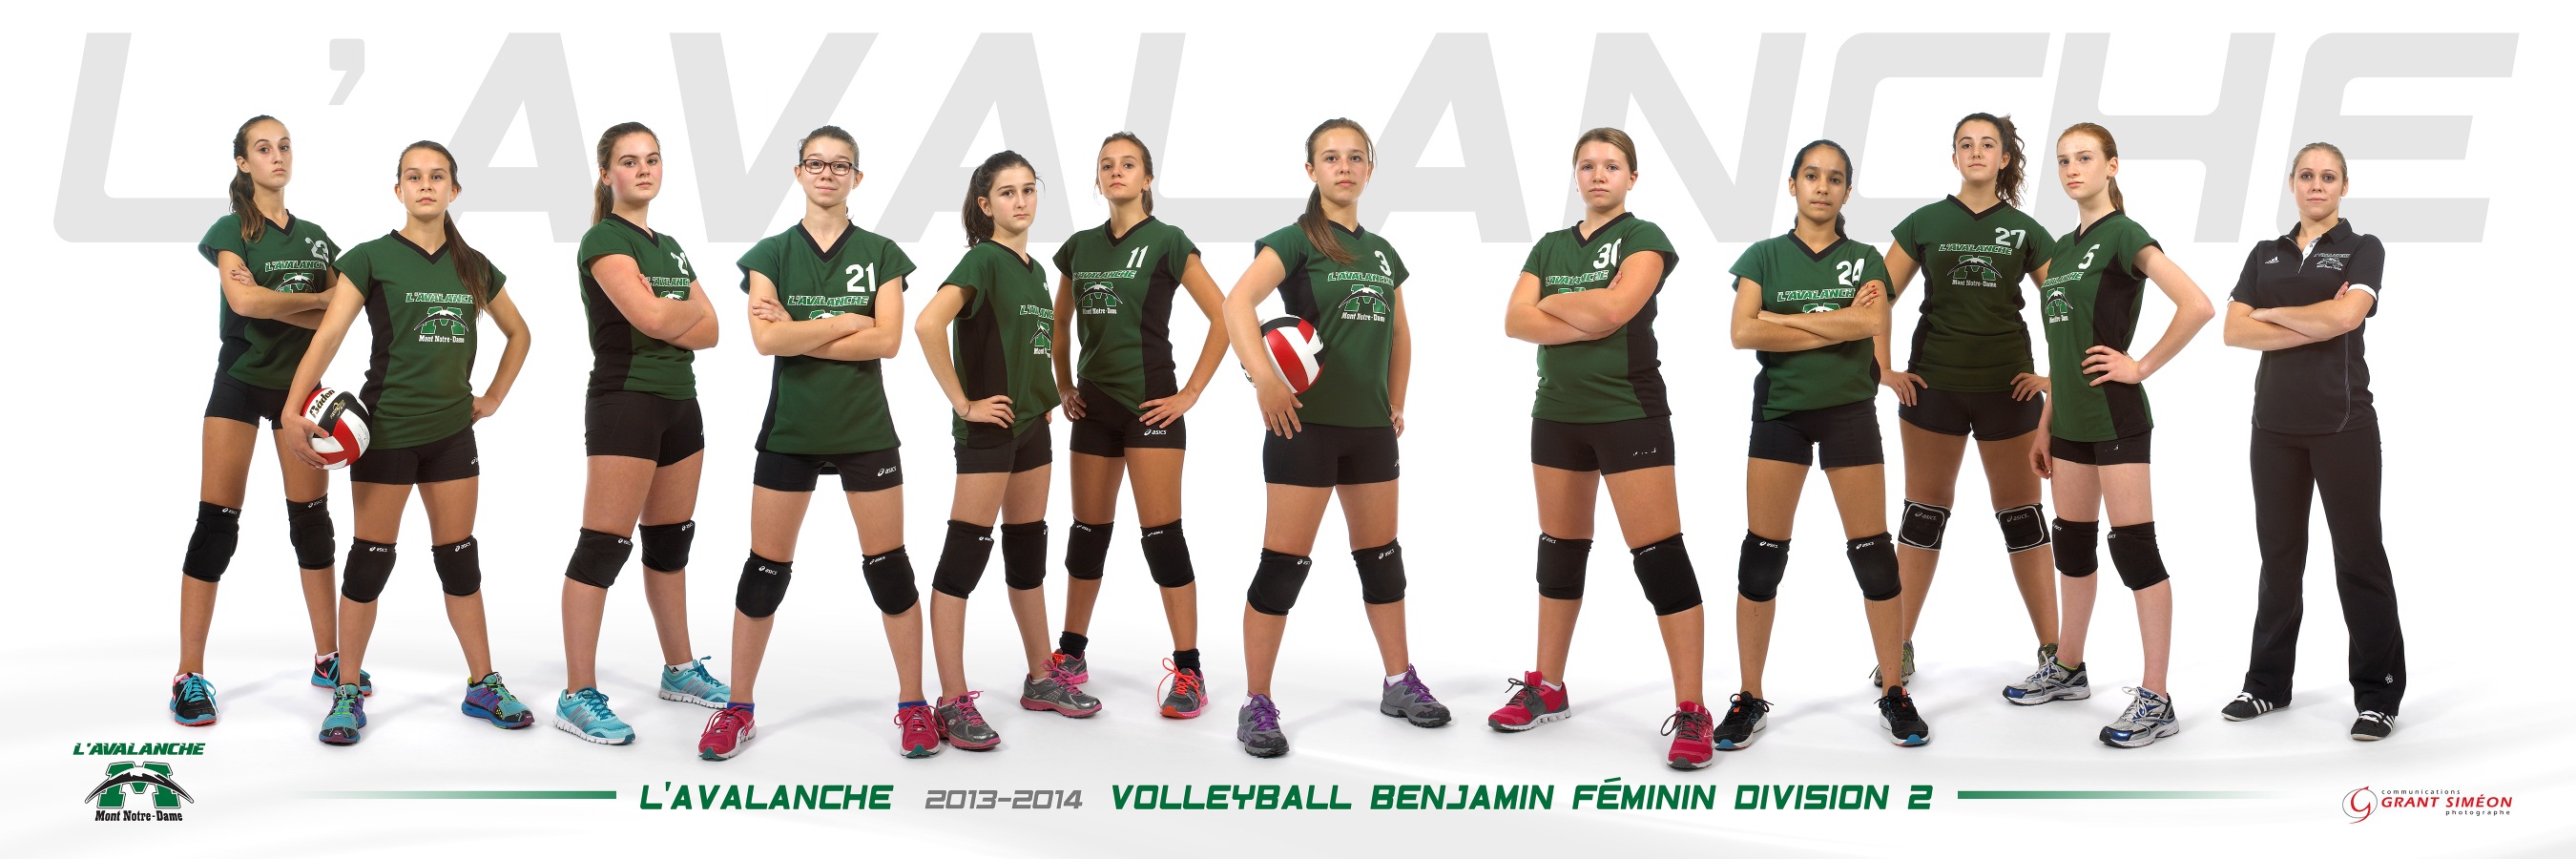 MND_volleyball-benjamine-div-3-2013-2014